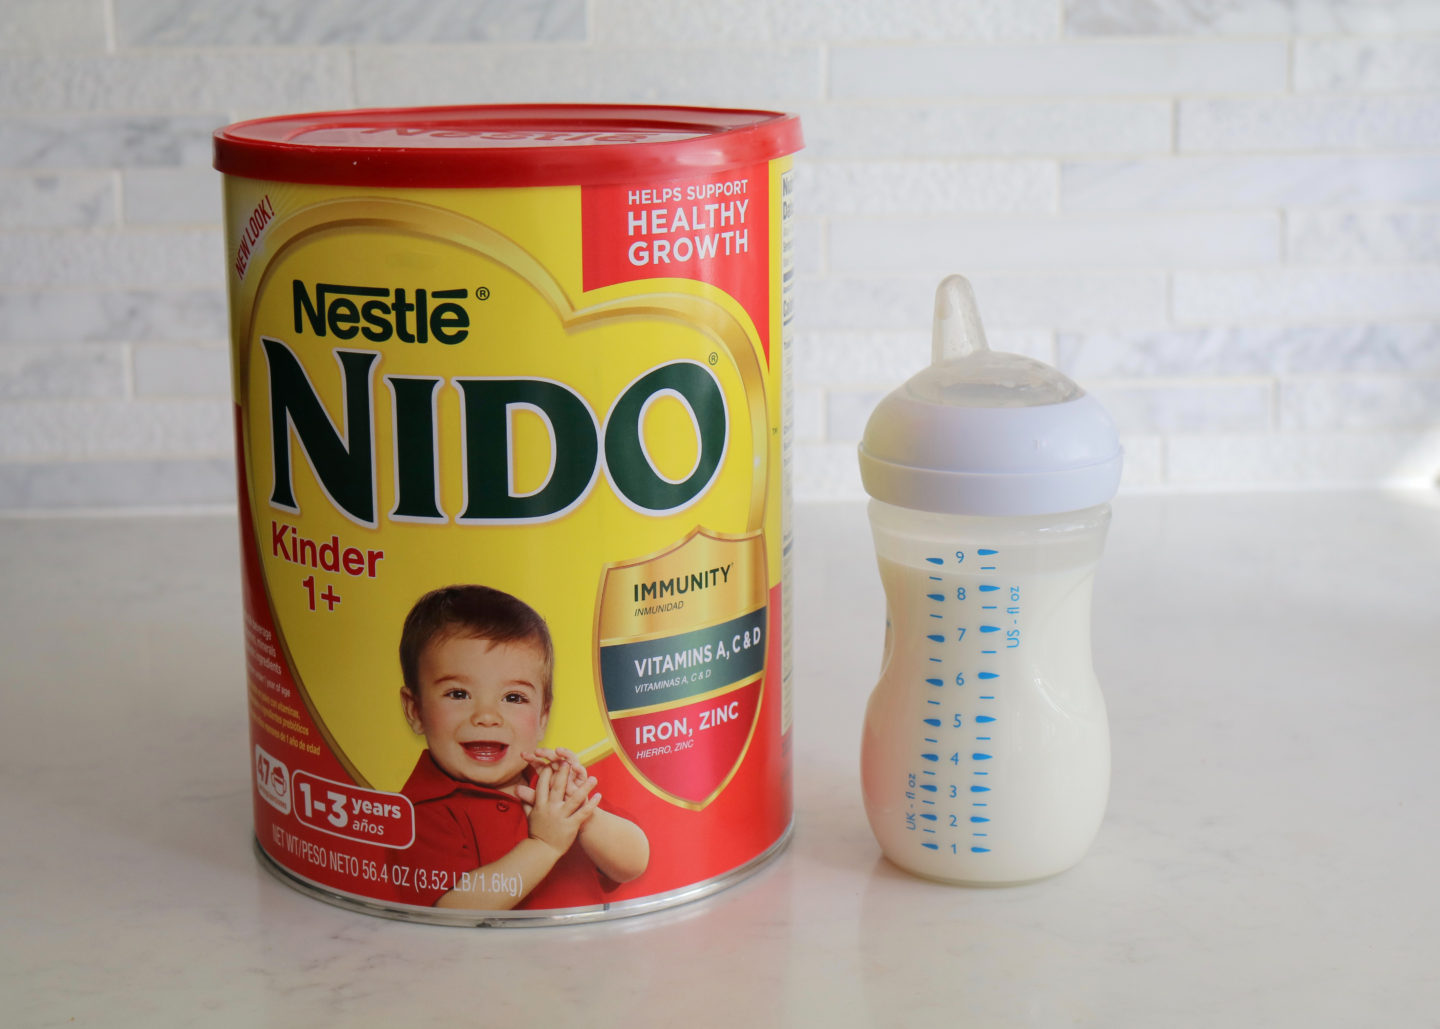 Nestle NIDO Kinder 1+